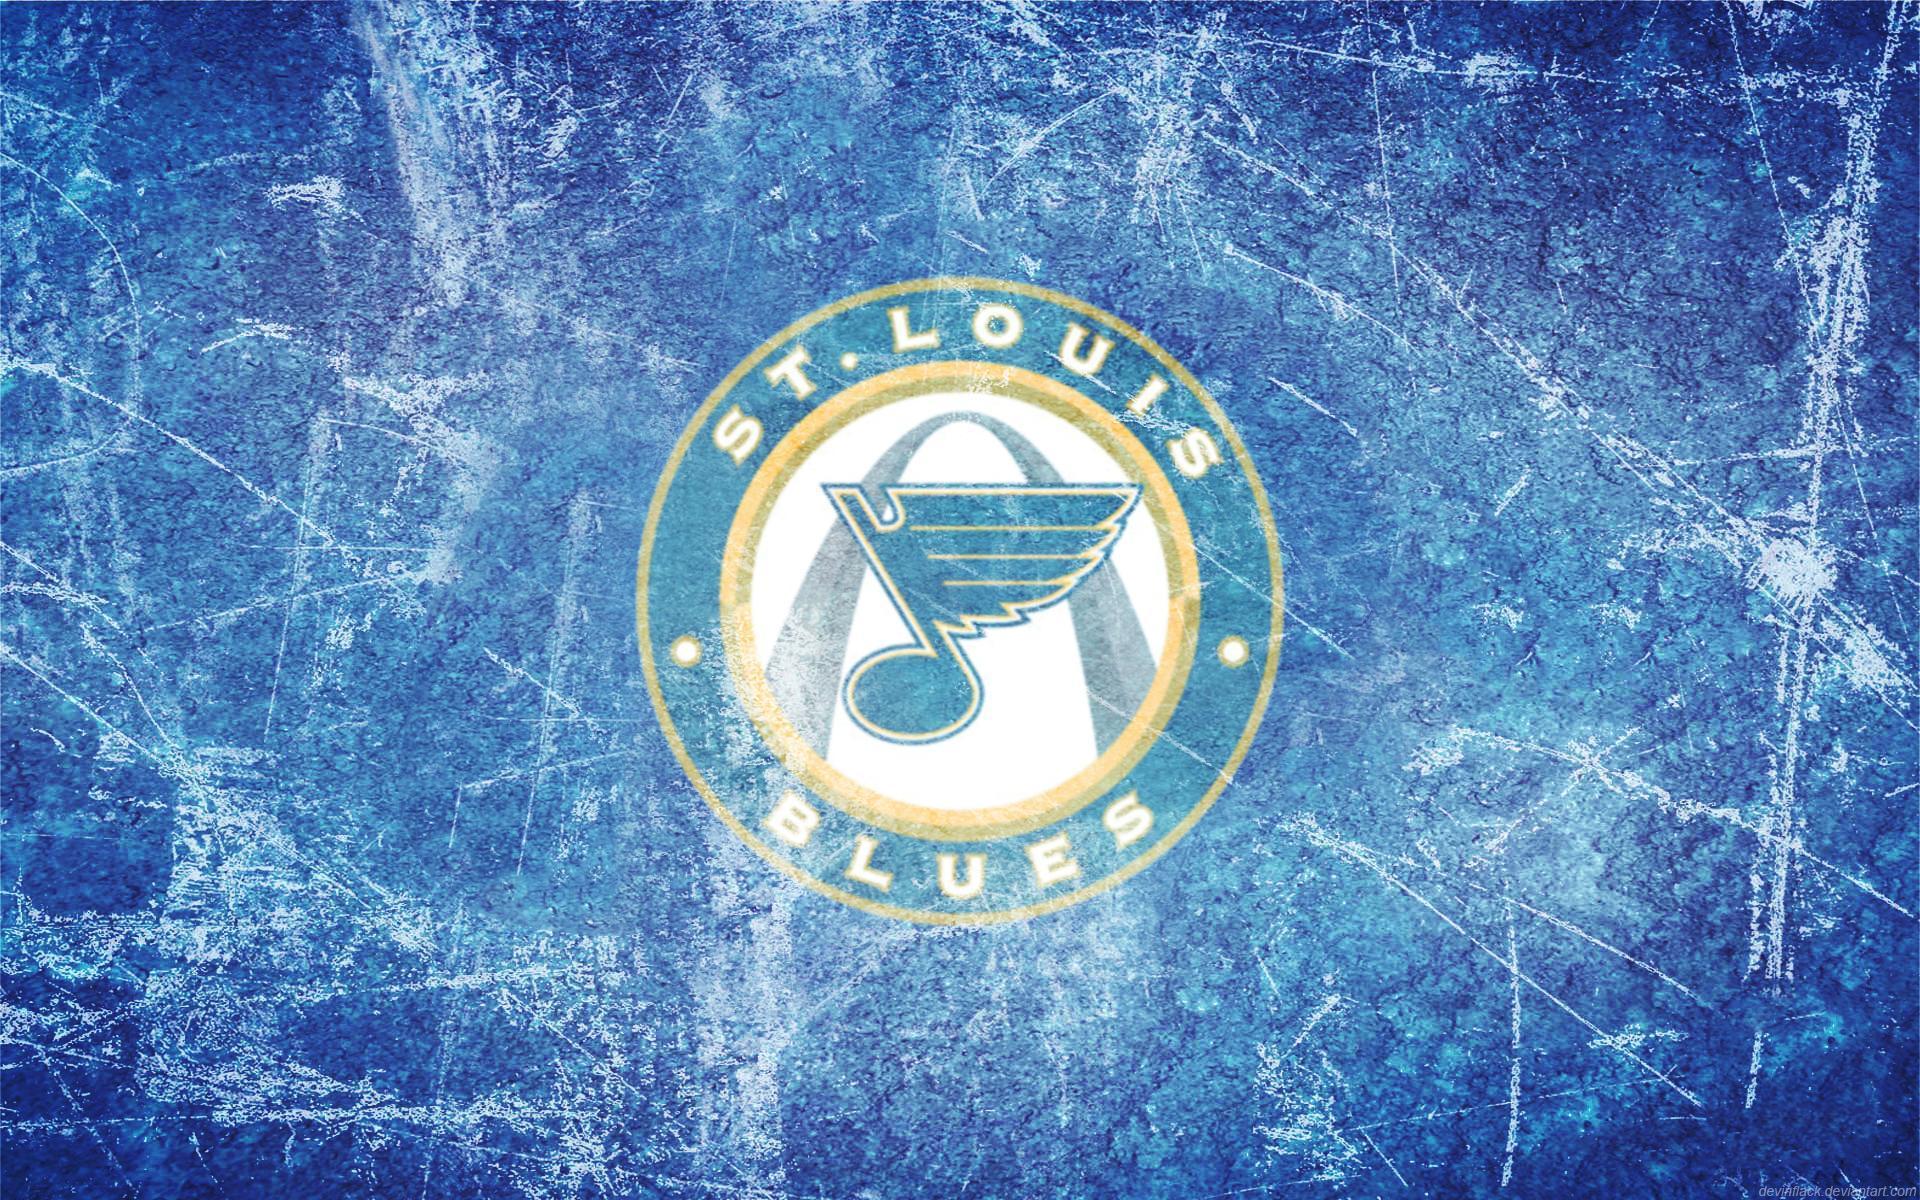 St Louis Blues Logo Wallpapers